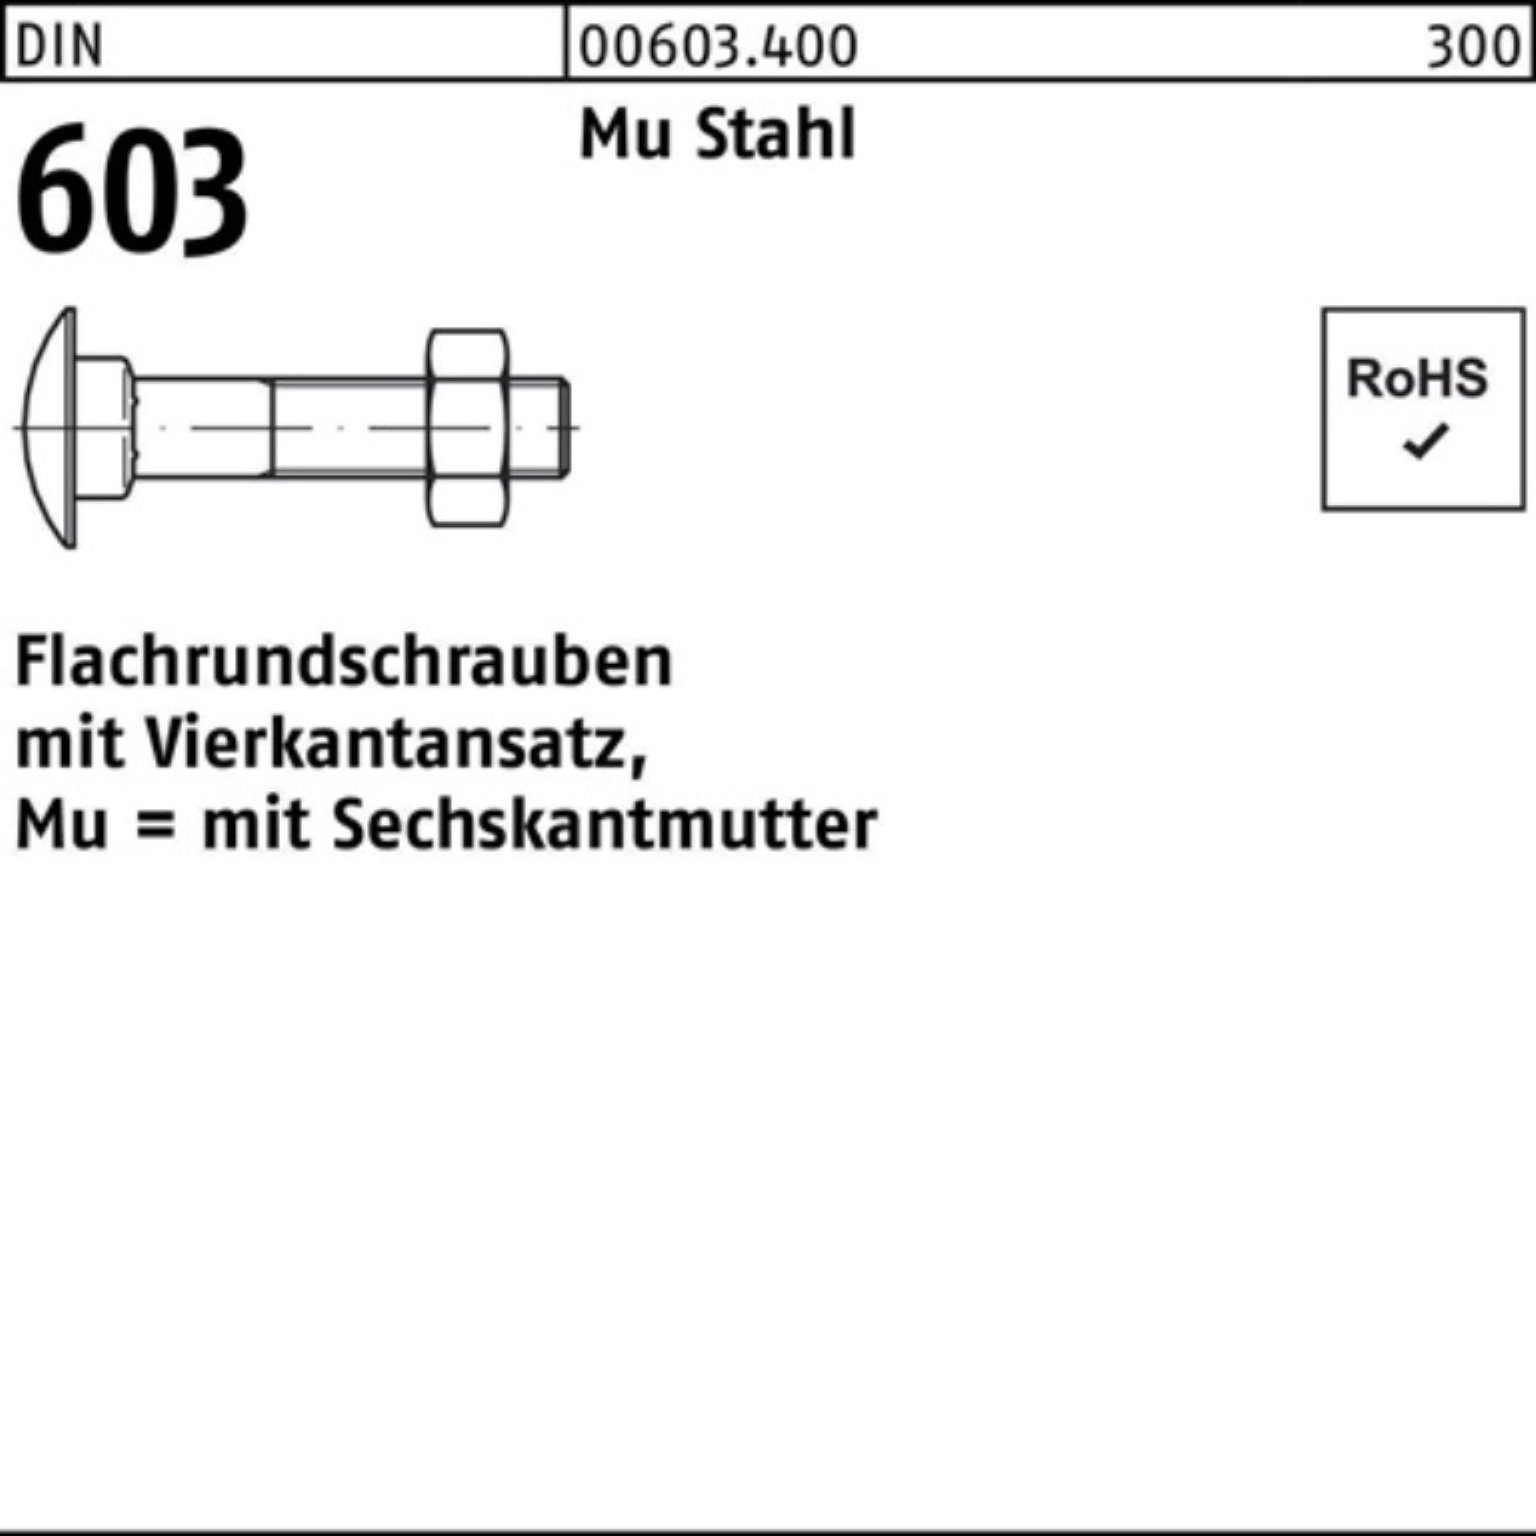 Reyher Pack Schraube 603 DIN Flachrundschraube Vierkantansatz/6-ktmutter M16x280 100er